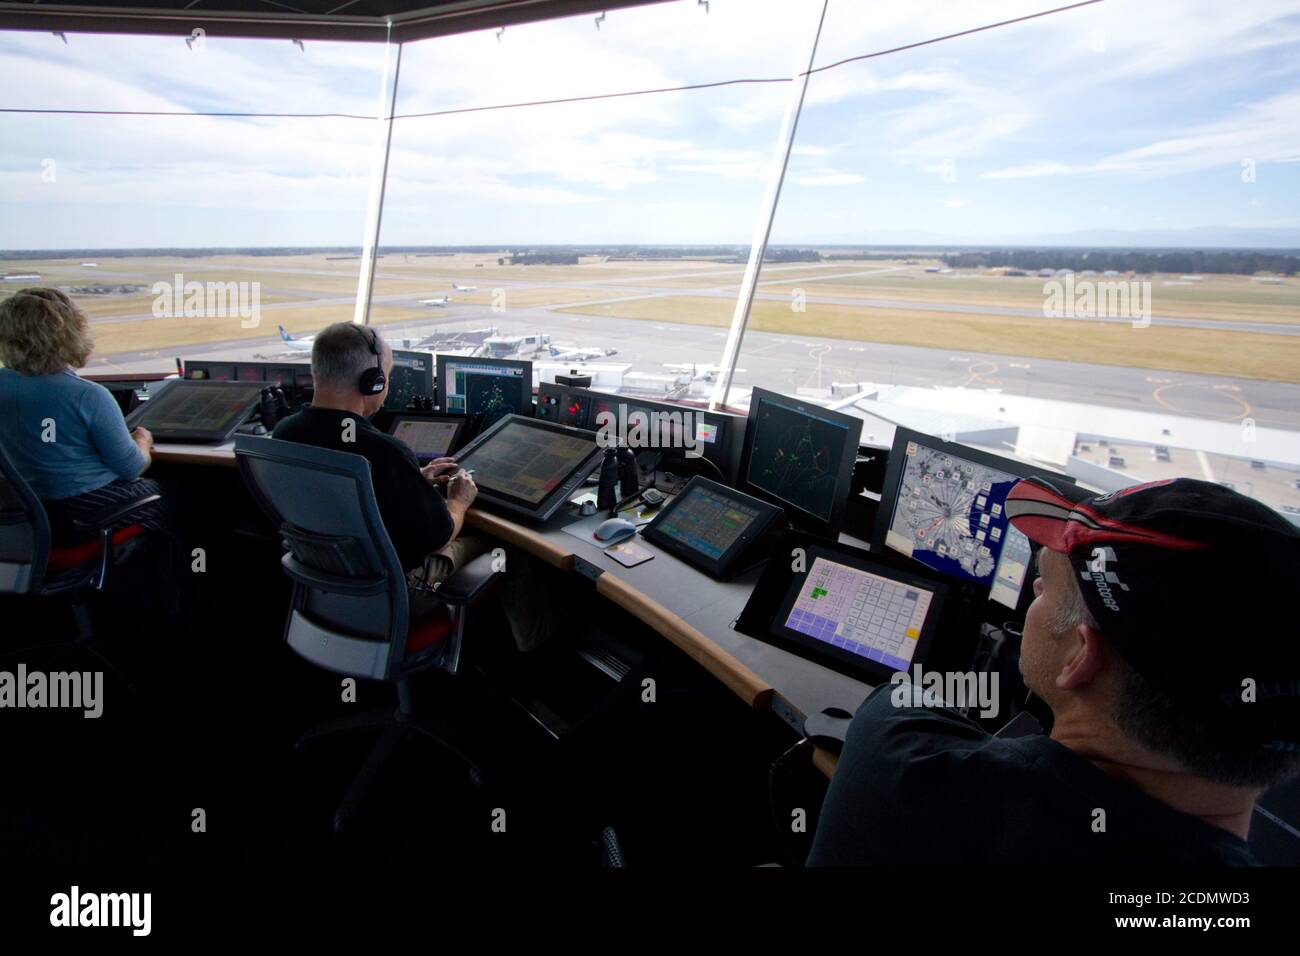 Air traffic controllers monitor aircraft movements at an international airport Stock Photo